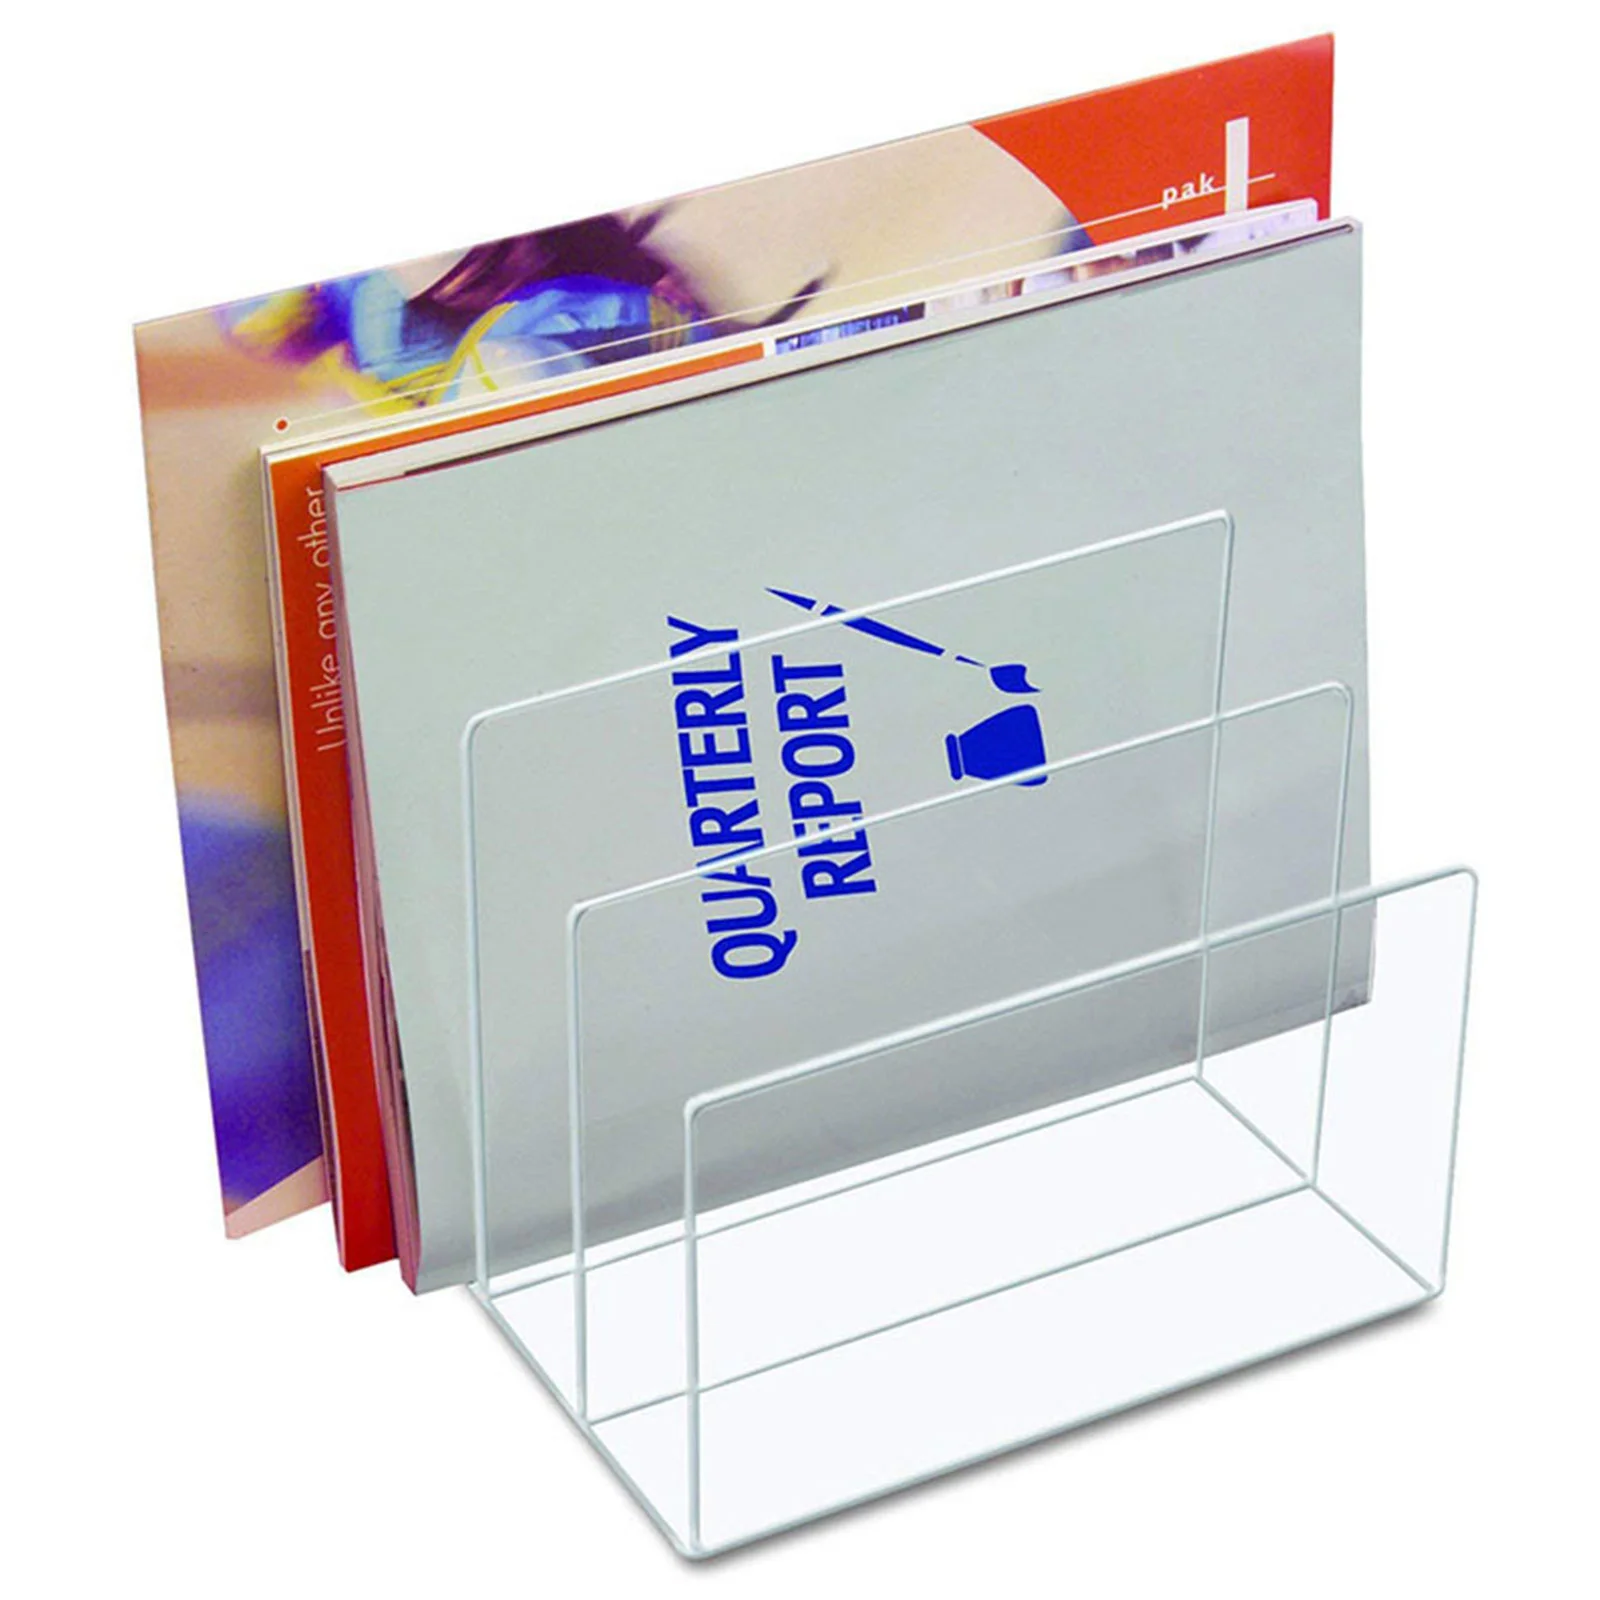 File Sorter Acrylic Holder Organizer Rack Desktop Desk Magazine Bookfolder Stand Document Paper Display Letter Tray Storage images - 6